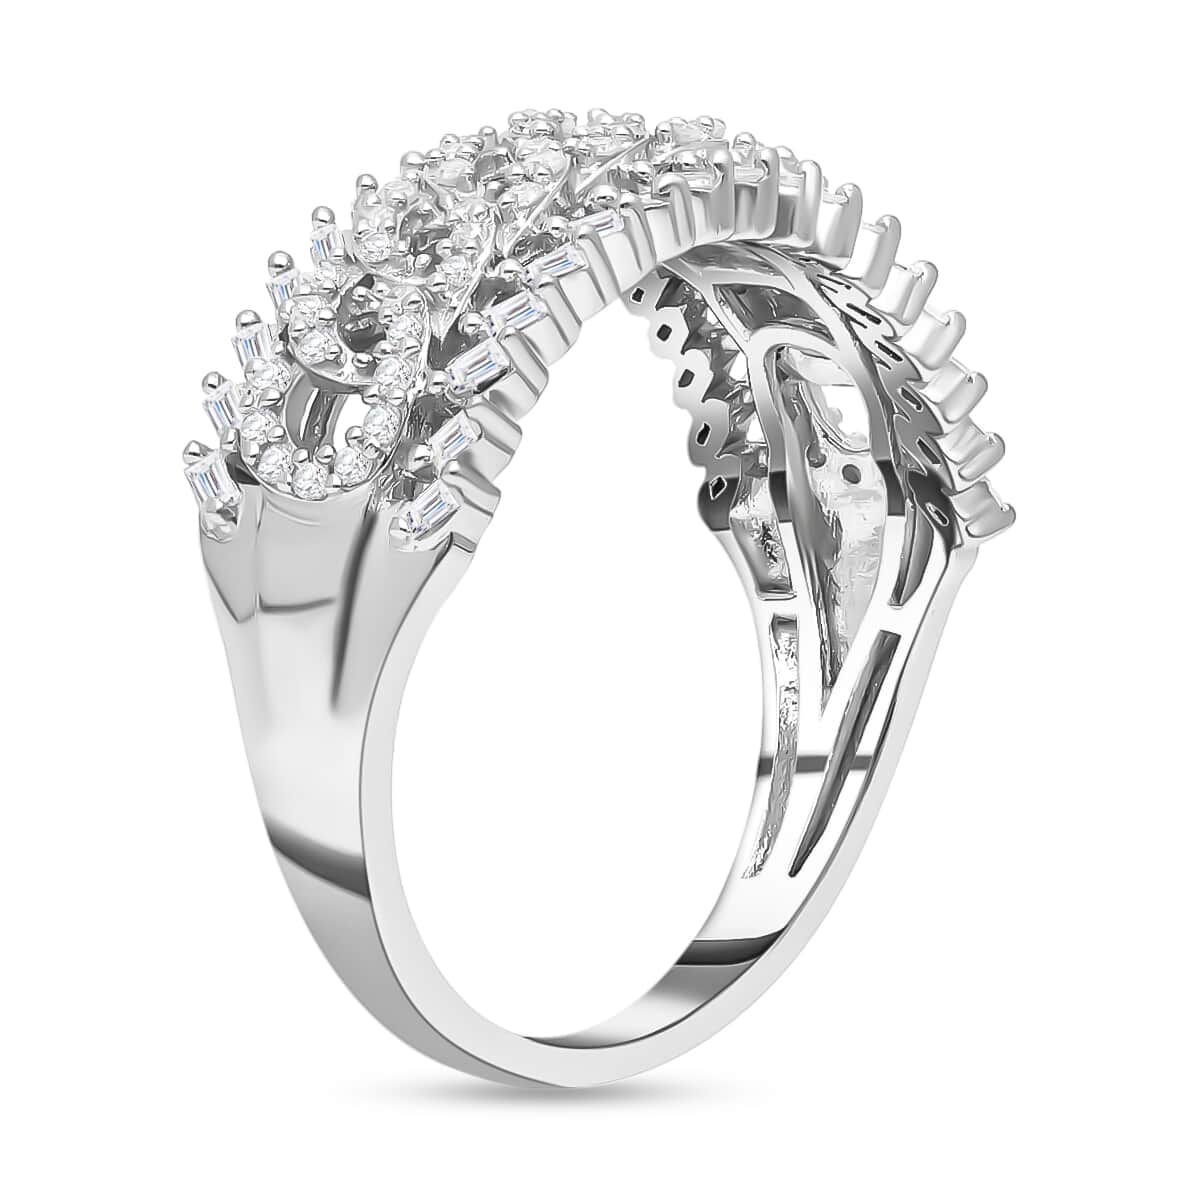 White Diamond Ring, Platinum Over Sterling Silver Ring, Diamond Band Ring, Diamond Jewelry 0.50 ctw (Size 10.0) image number 3